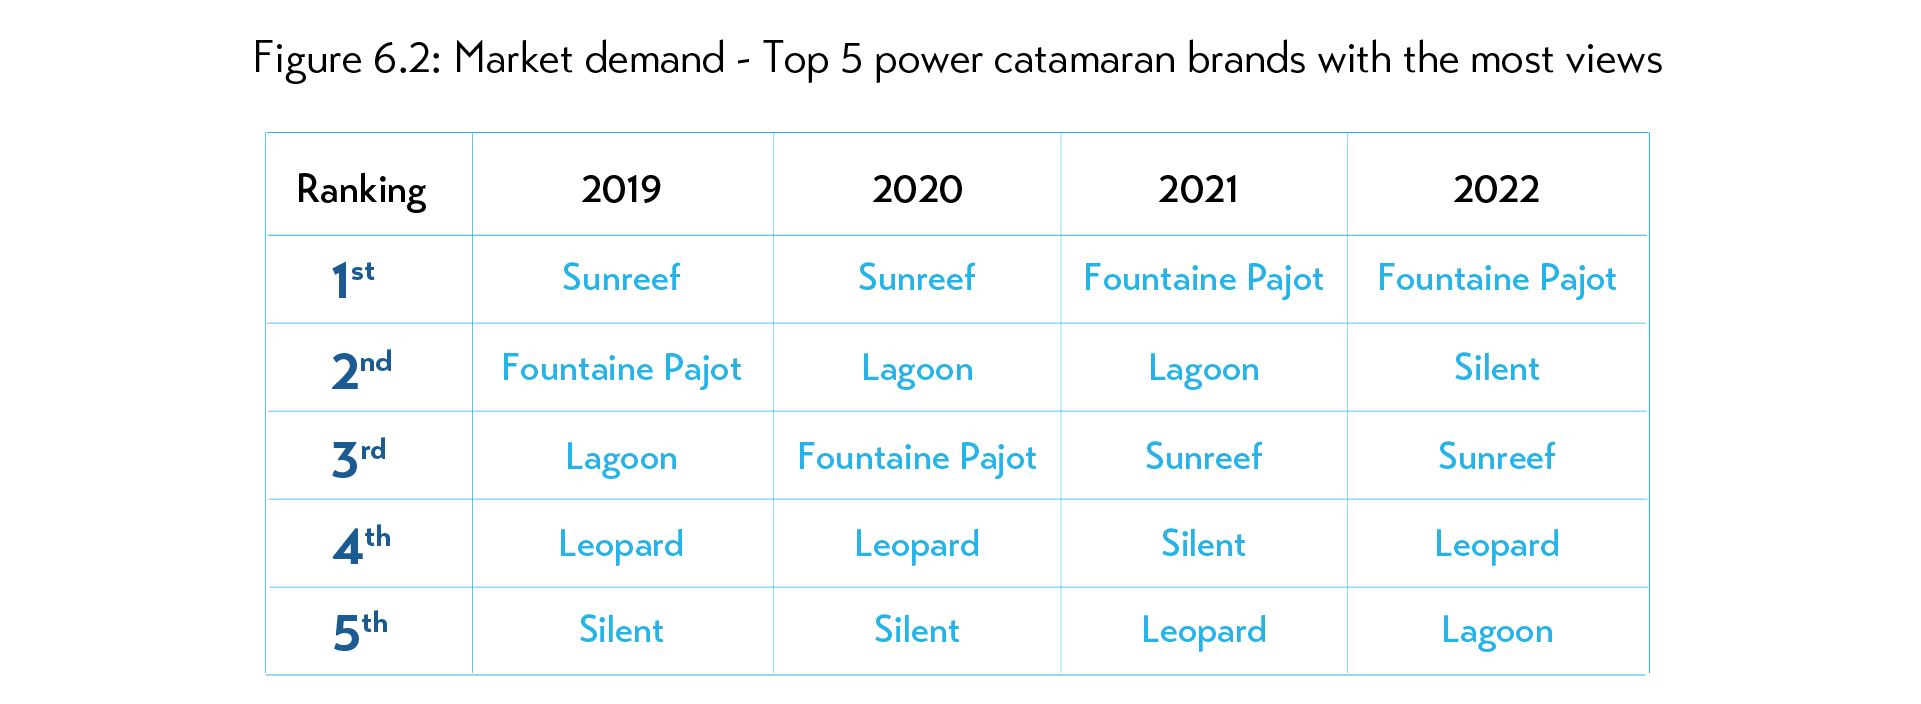 Market demand - Top 5 power catamaran brands with the most views